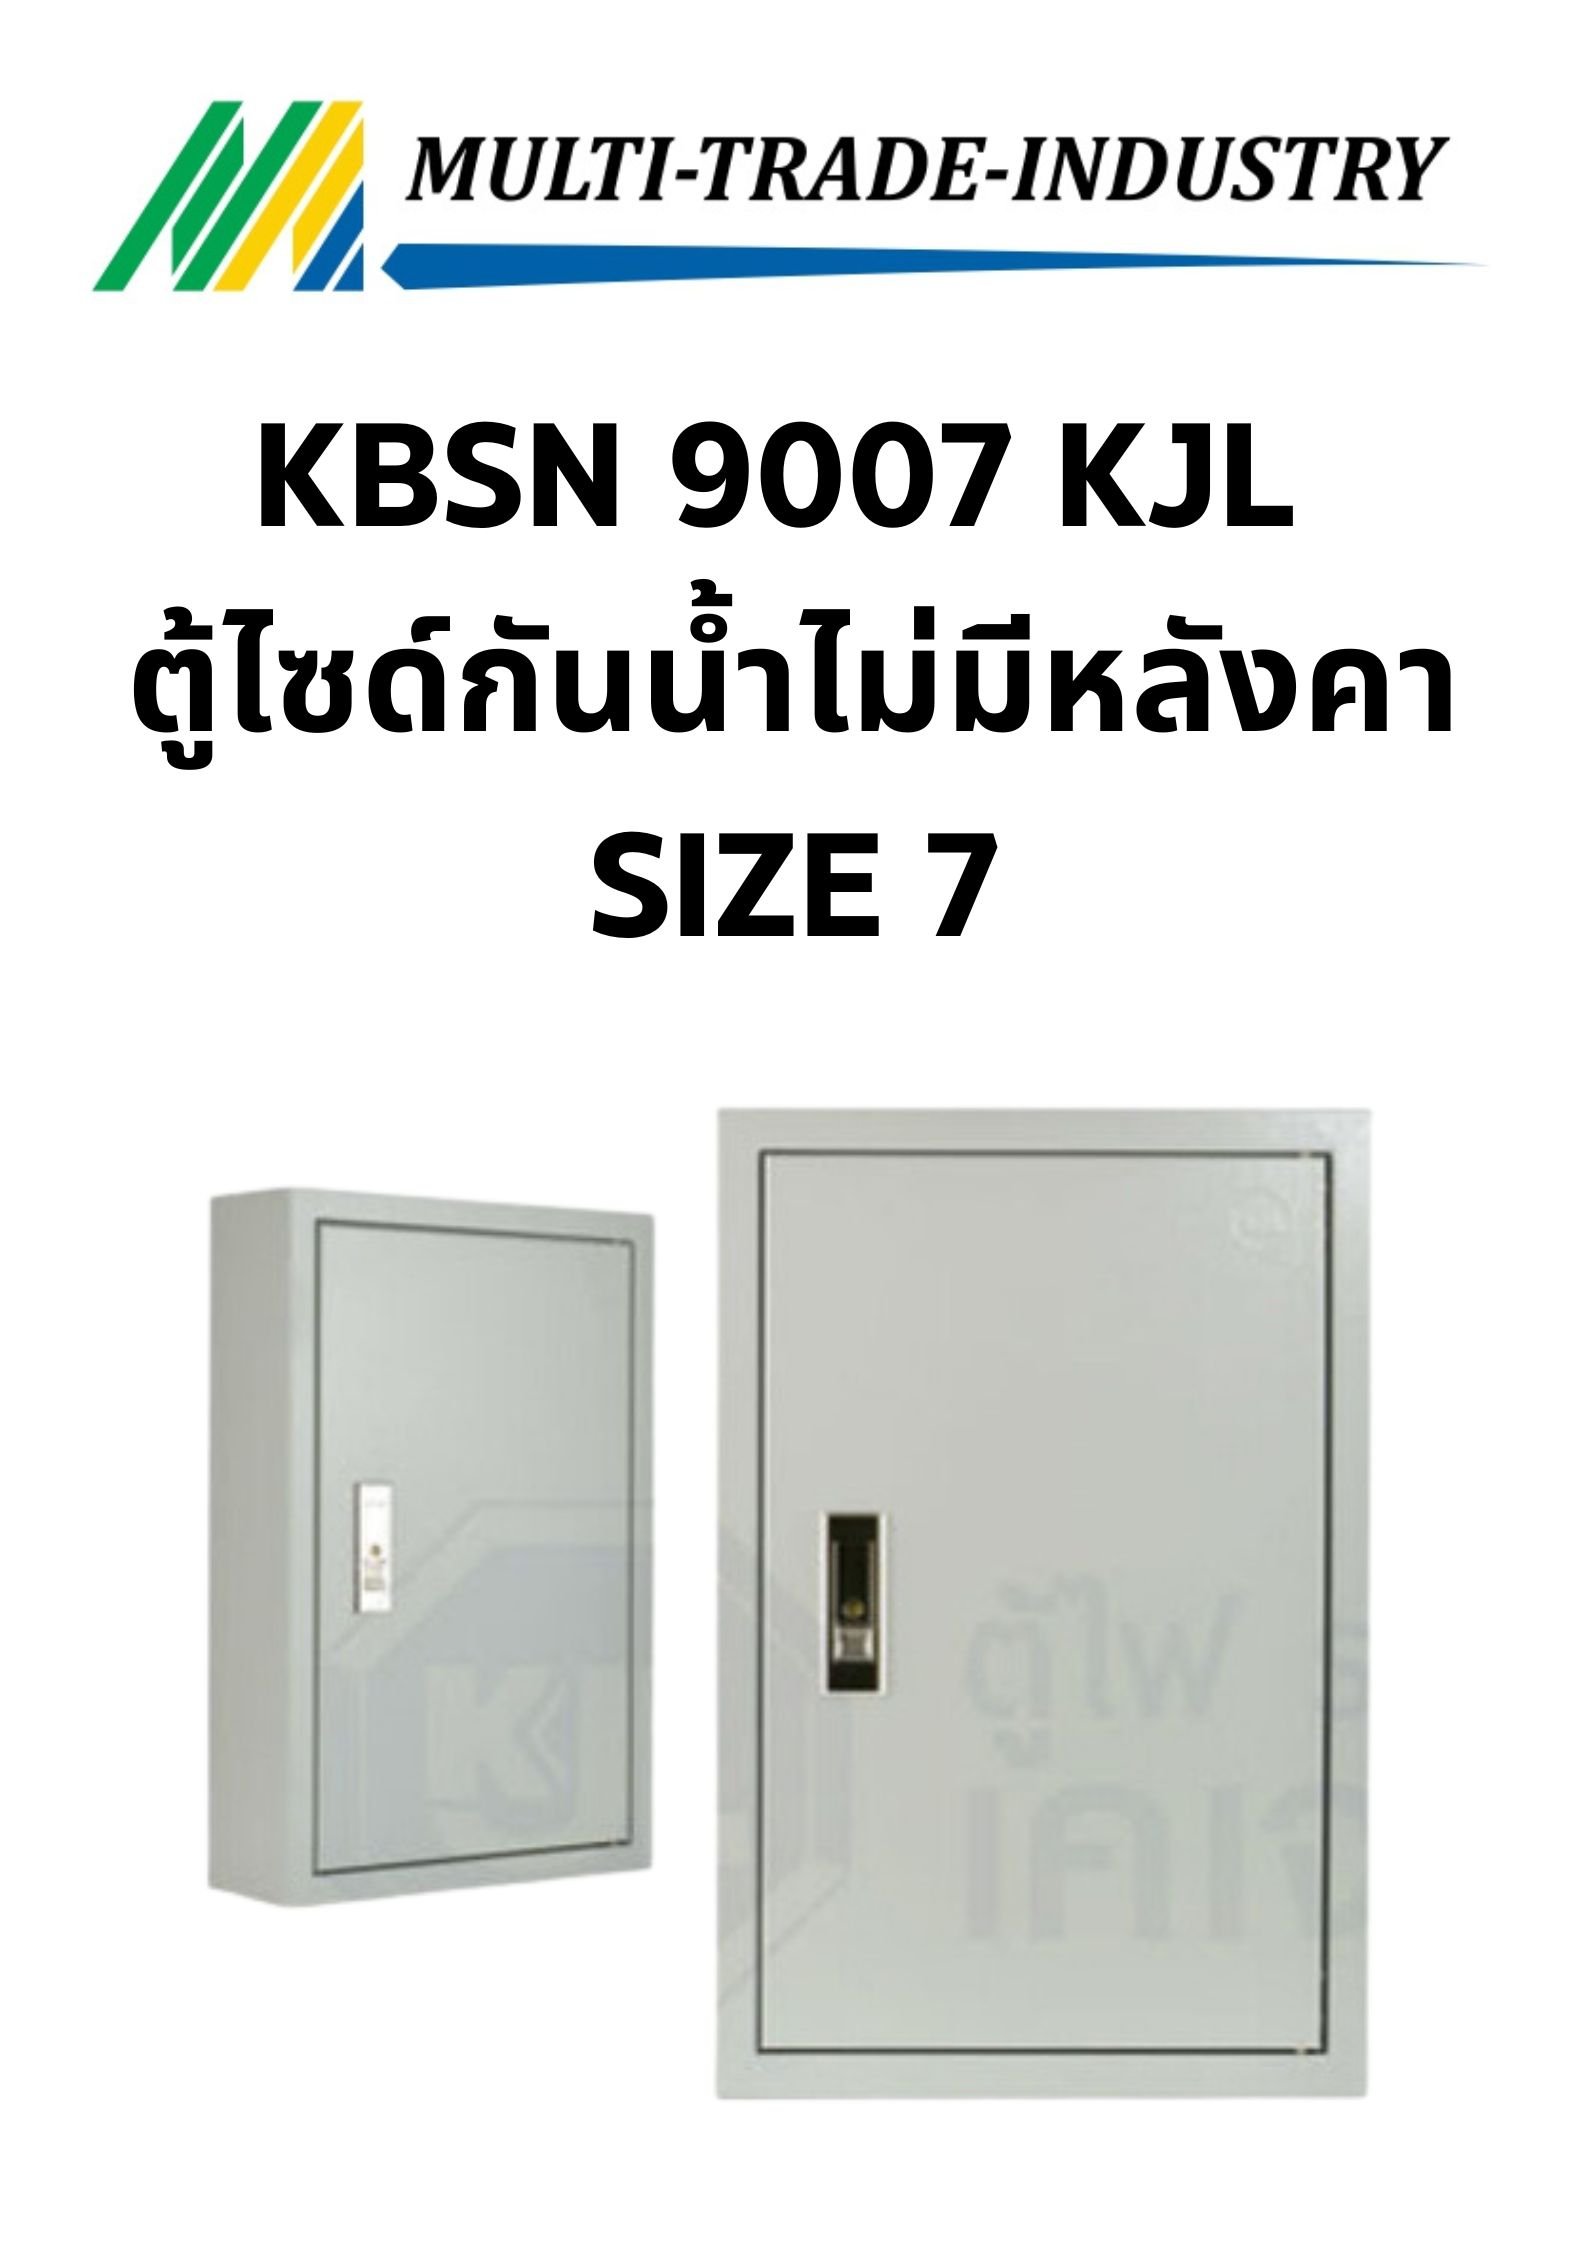 KBSN 9007 KJL ตู้ไซด์กันน้ำไม่มีหลังคา SIZE7 640x920x250